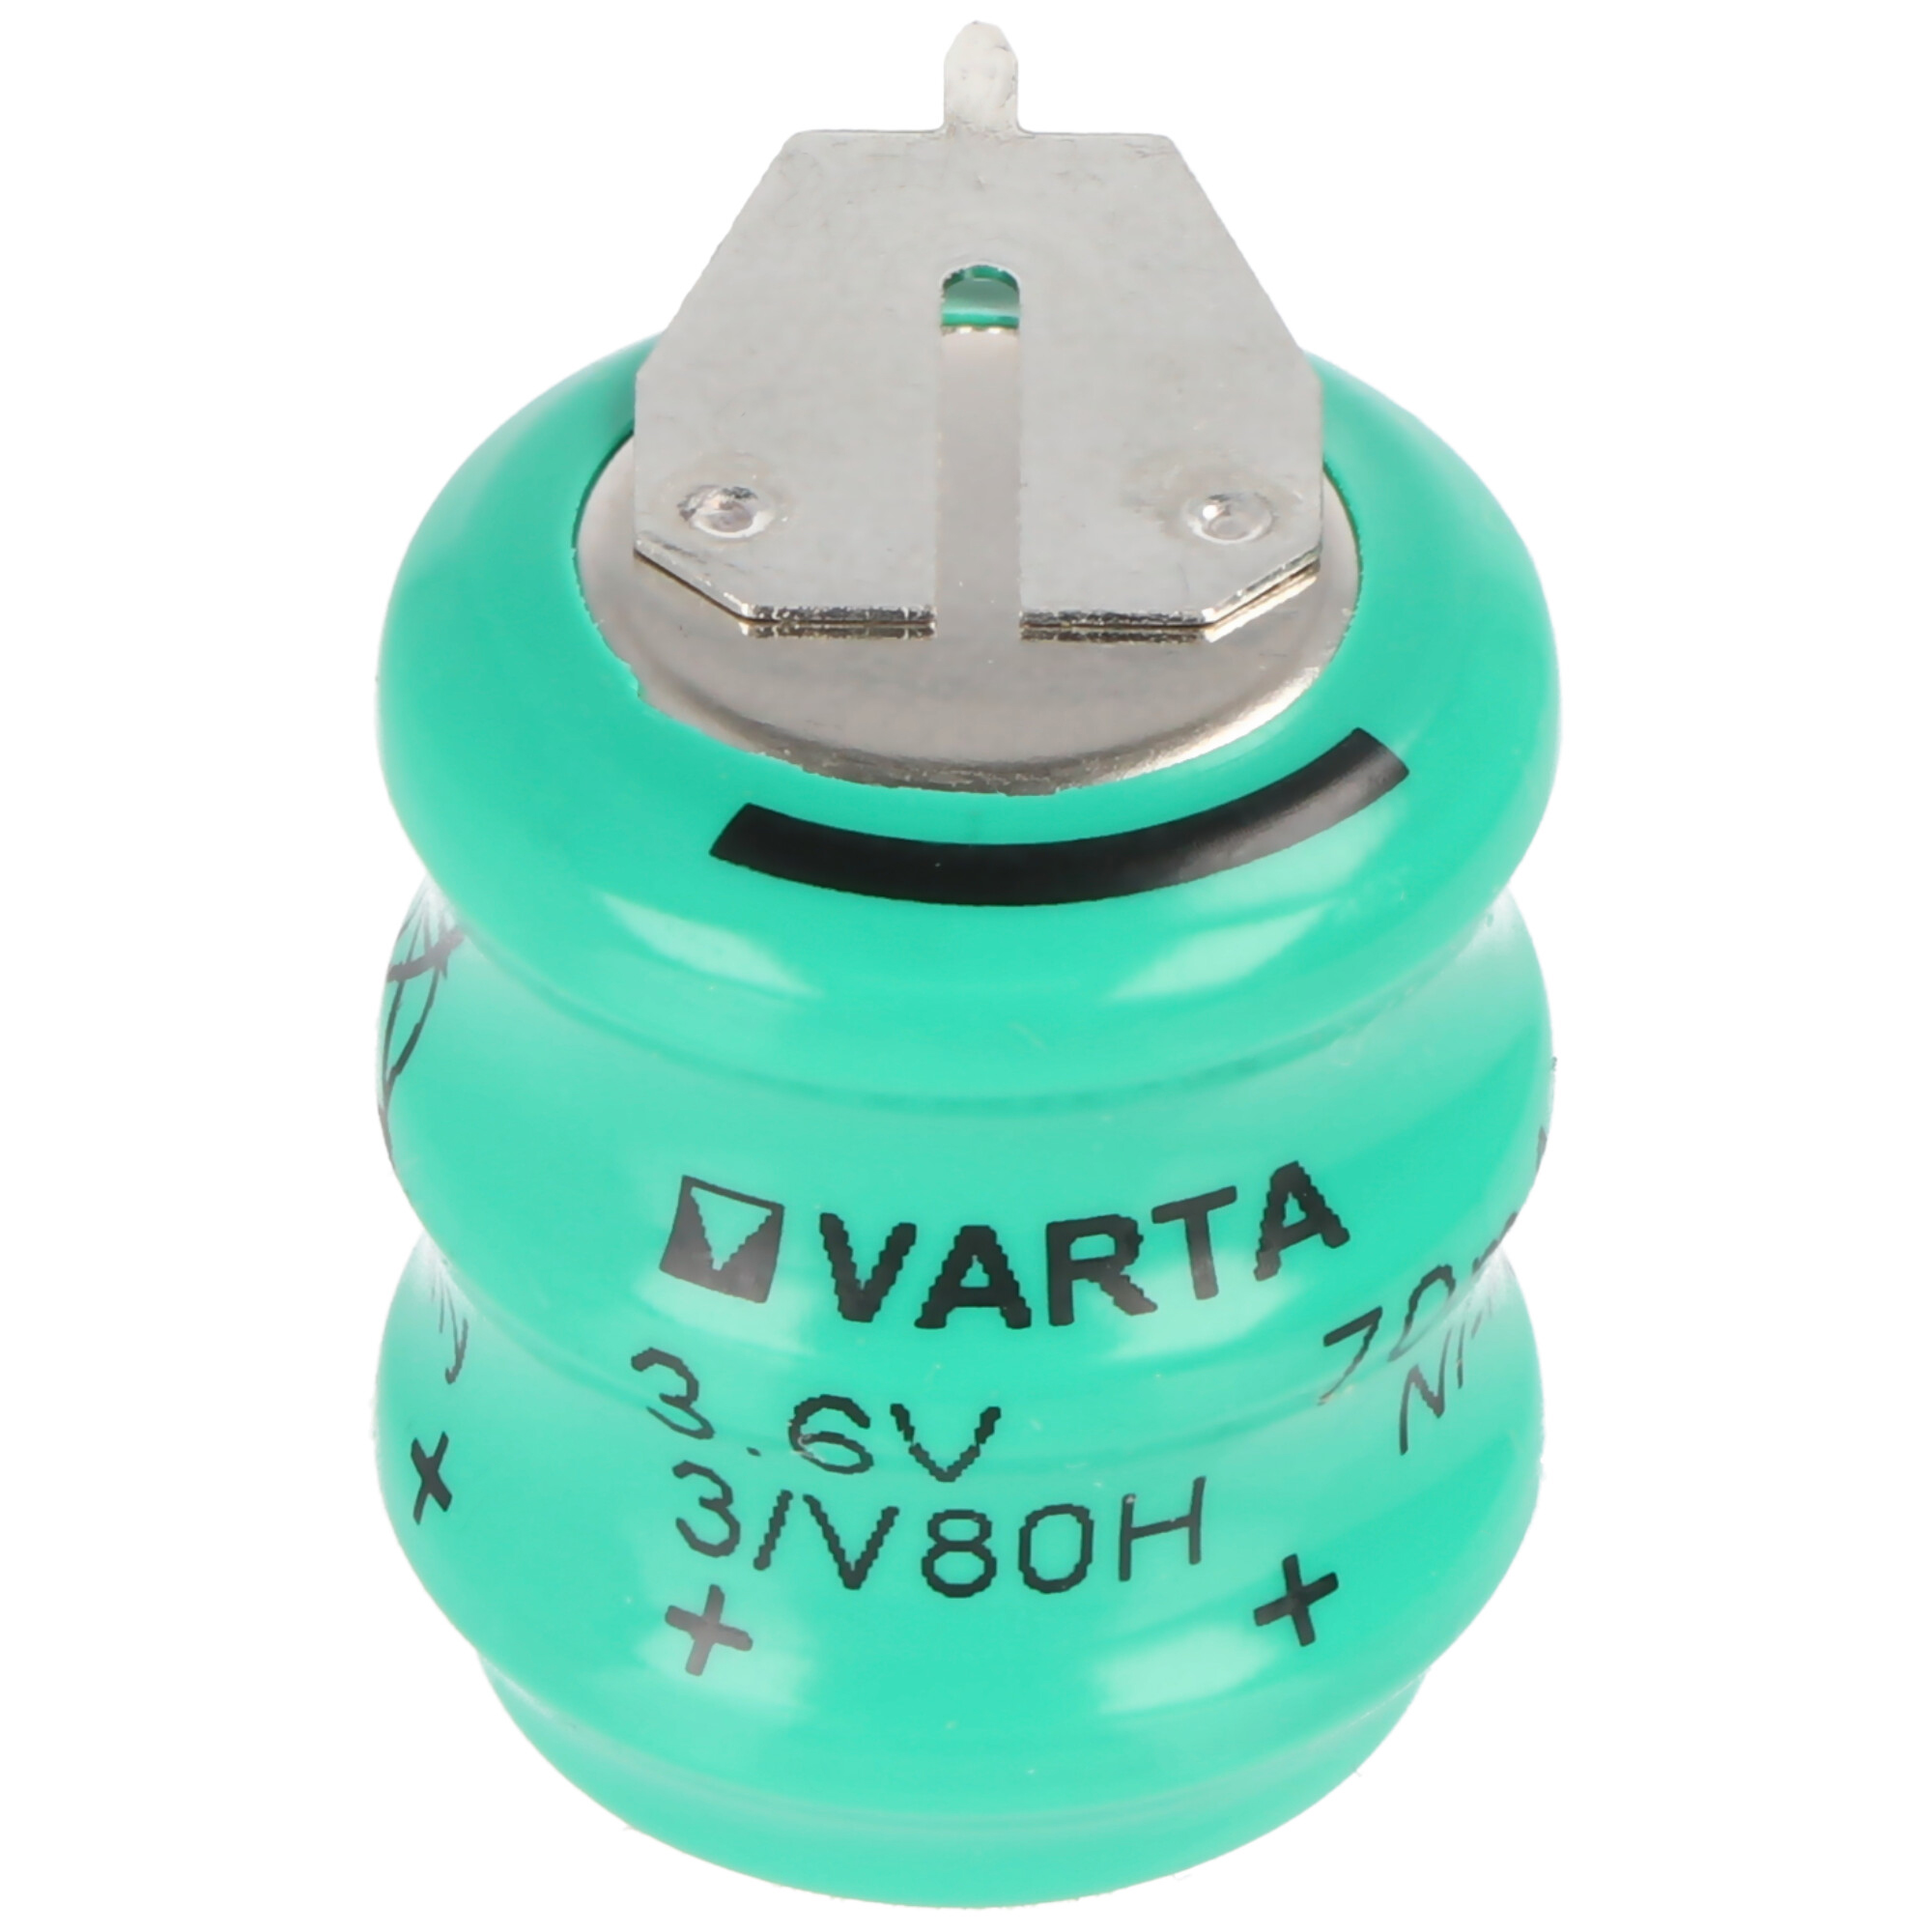 Varta 3/V80H Säule 3,6 Volt 70mAh mit 1er Print Kontakt auf +/- 3/V65HT